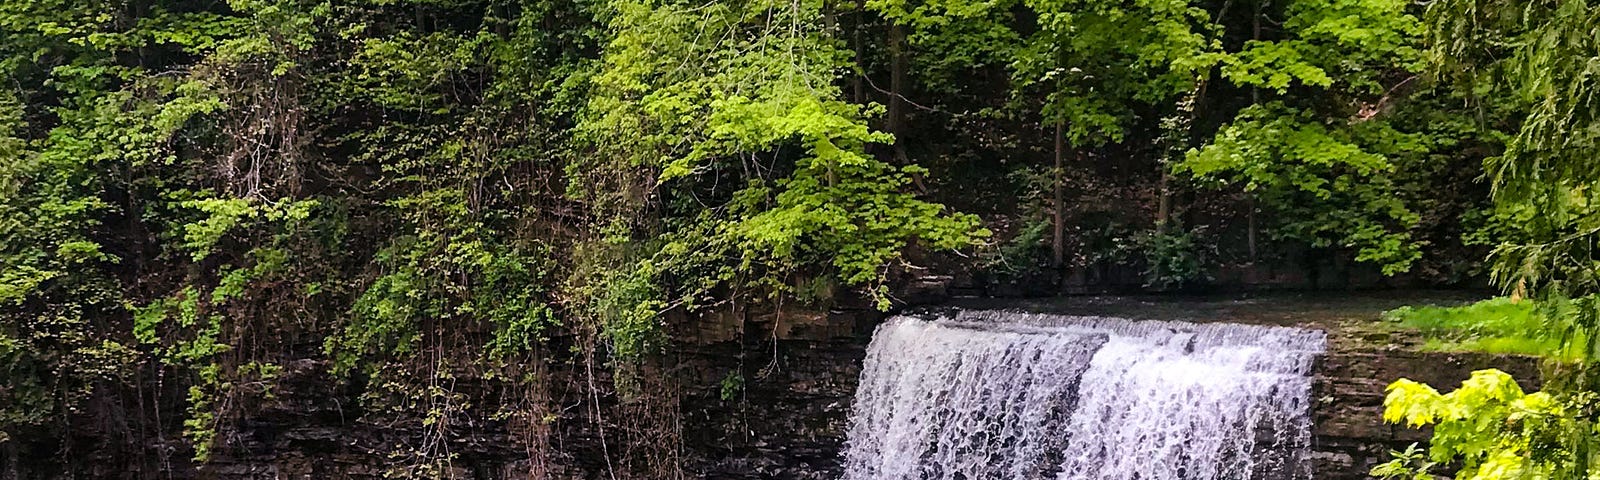 cascading waterfalls tumbling over rock steps | nature photography | © pockett dessert